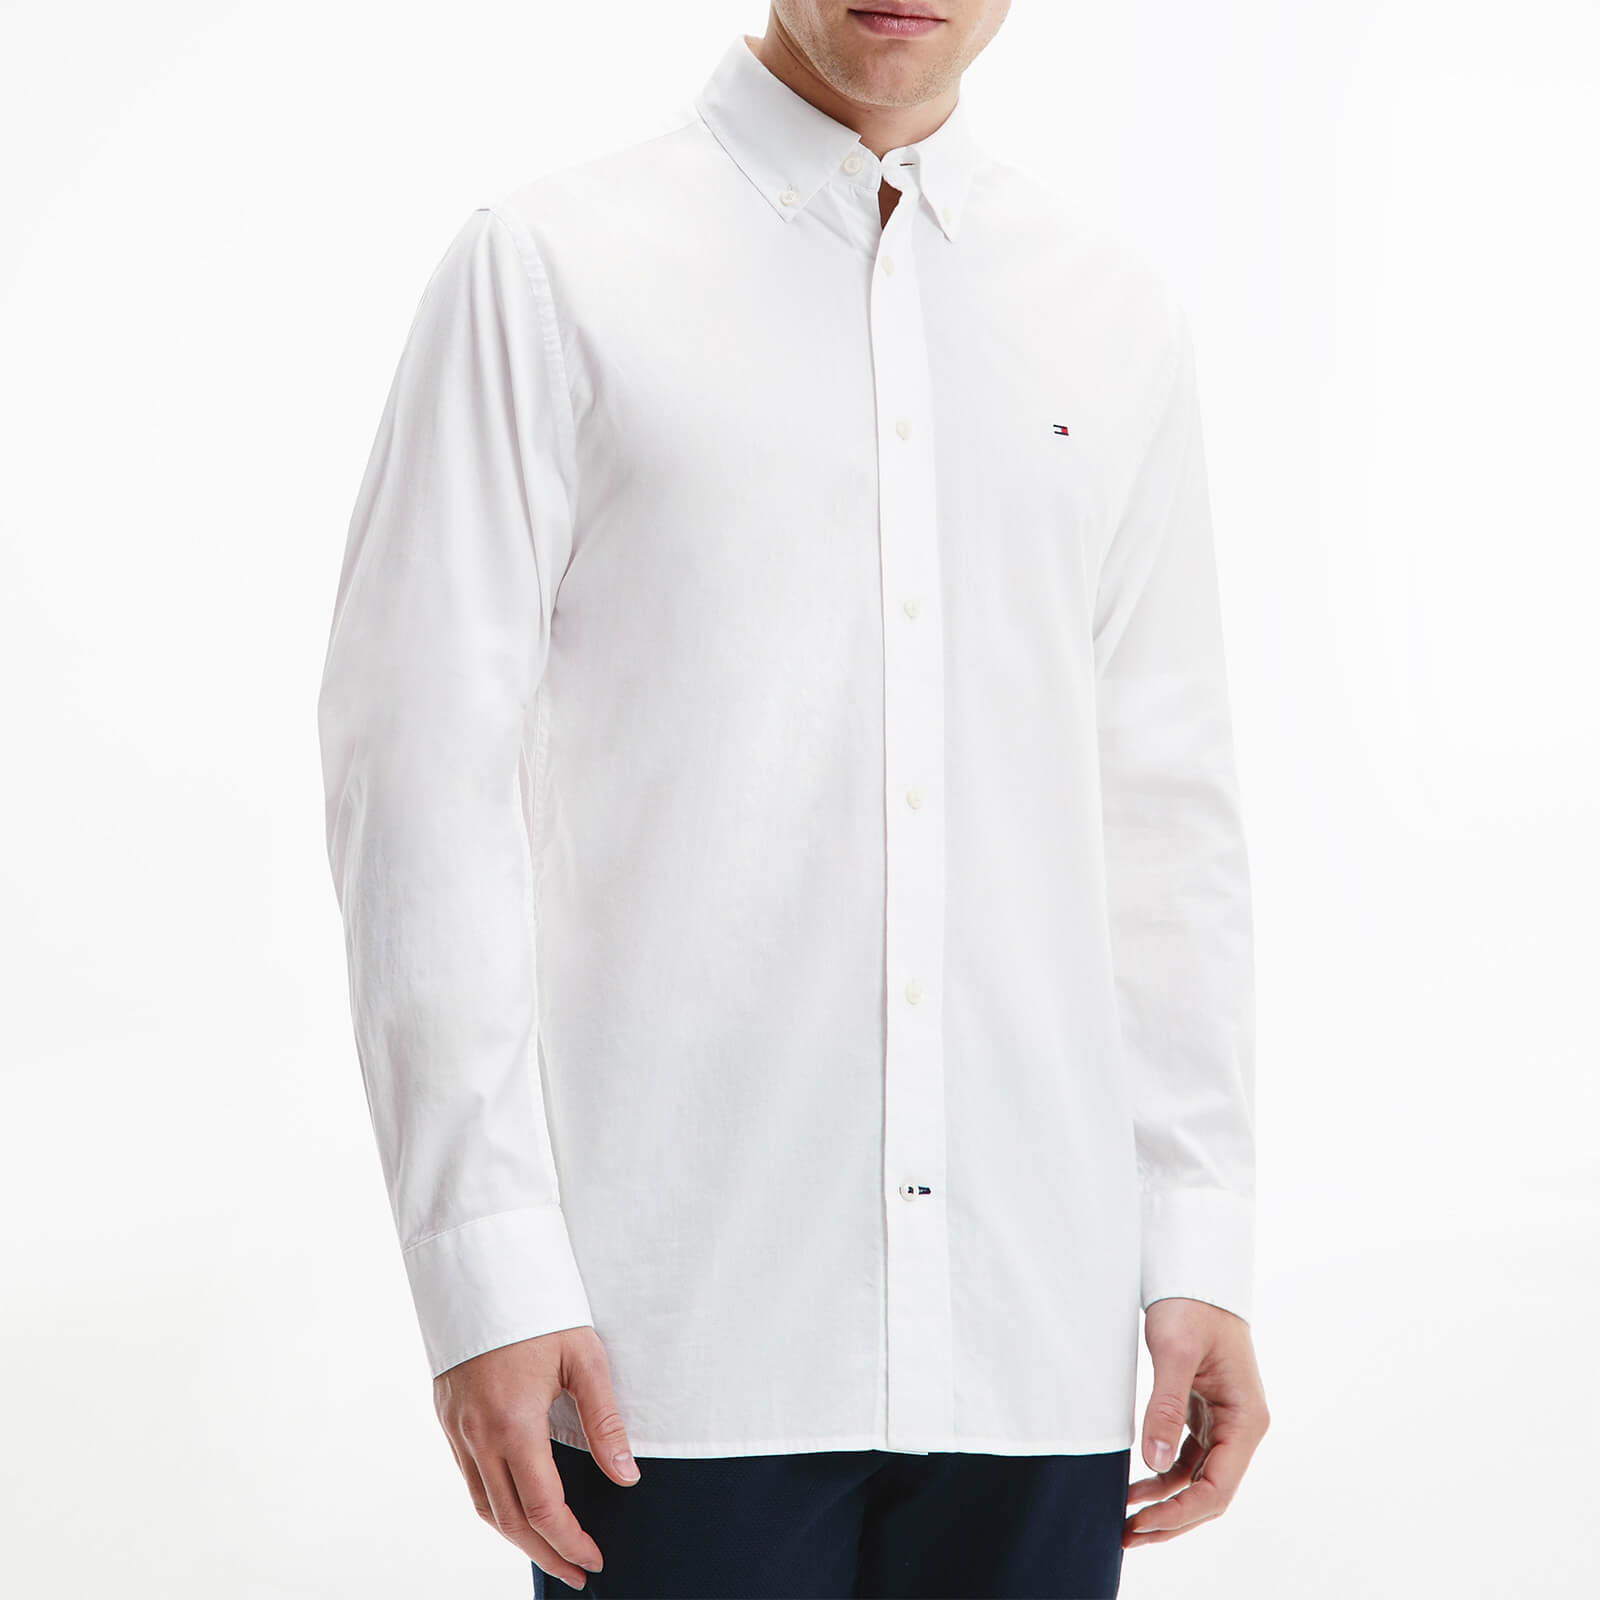 Tommy Hilfiger Men's Natural Soft Poplin Rf Shirt - White - S